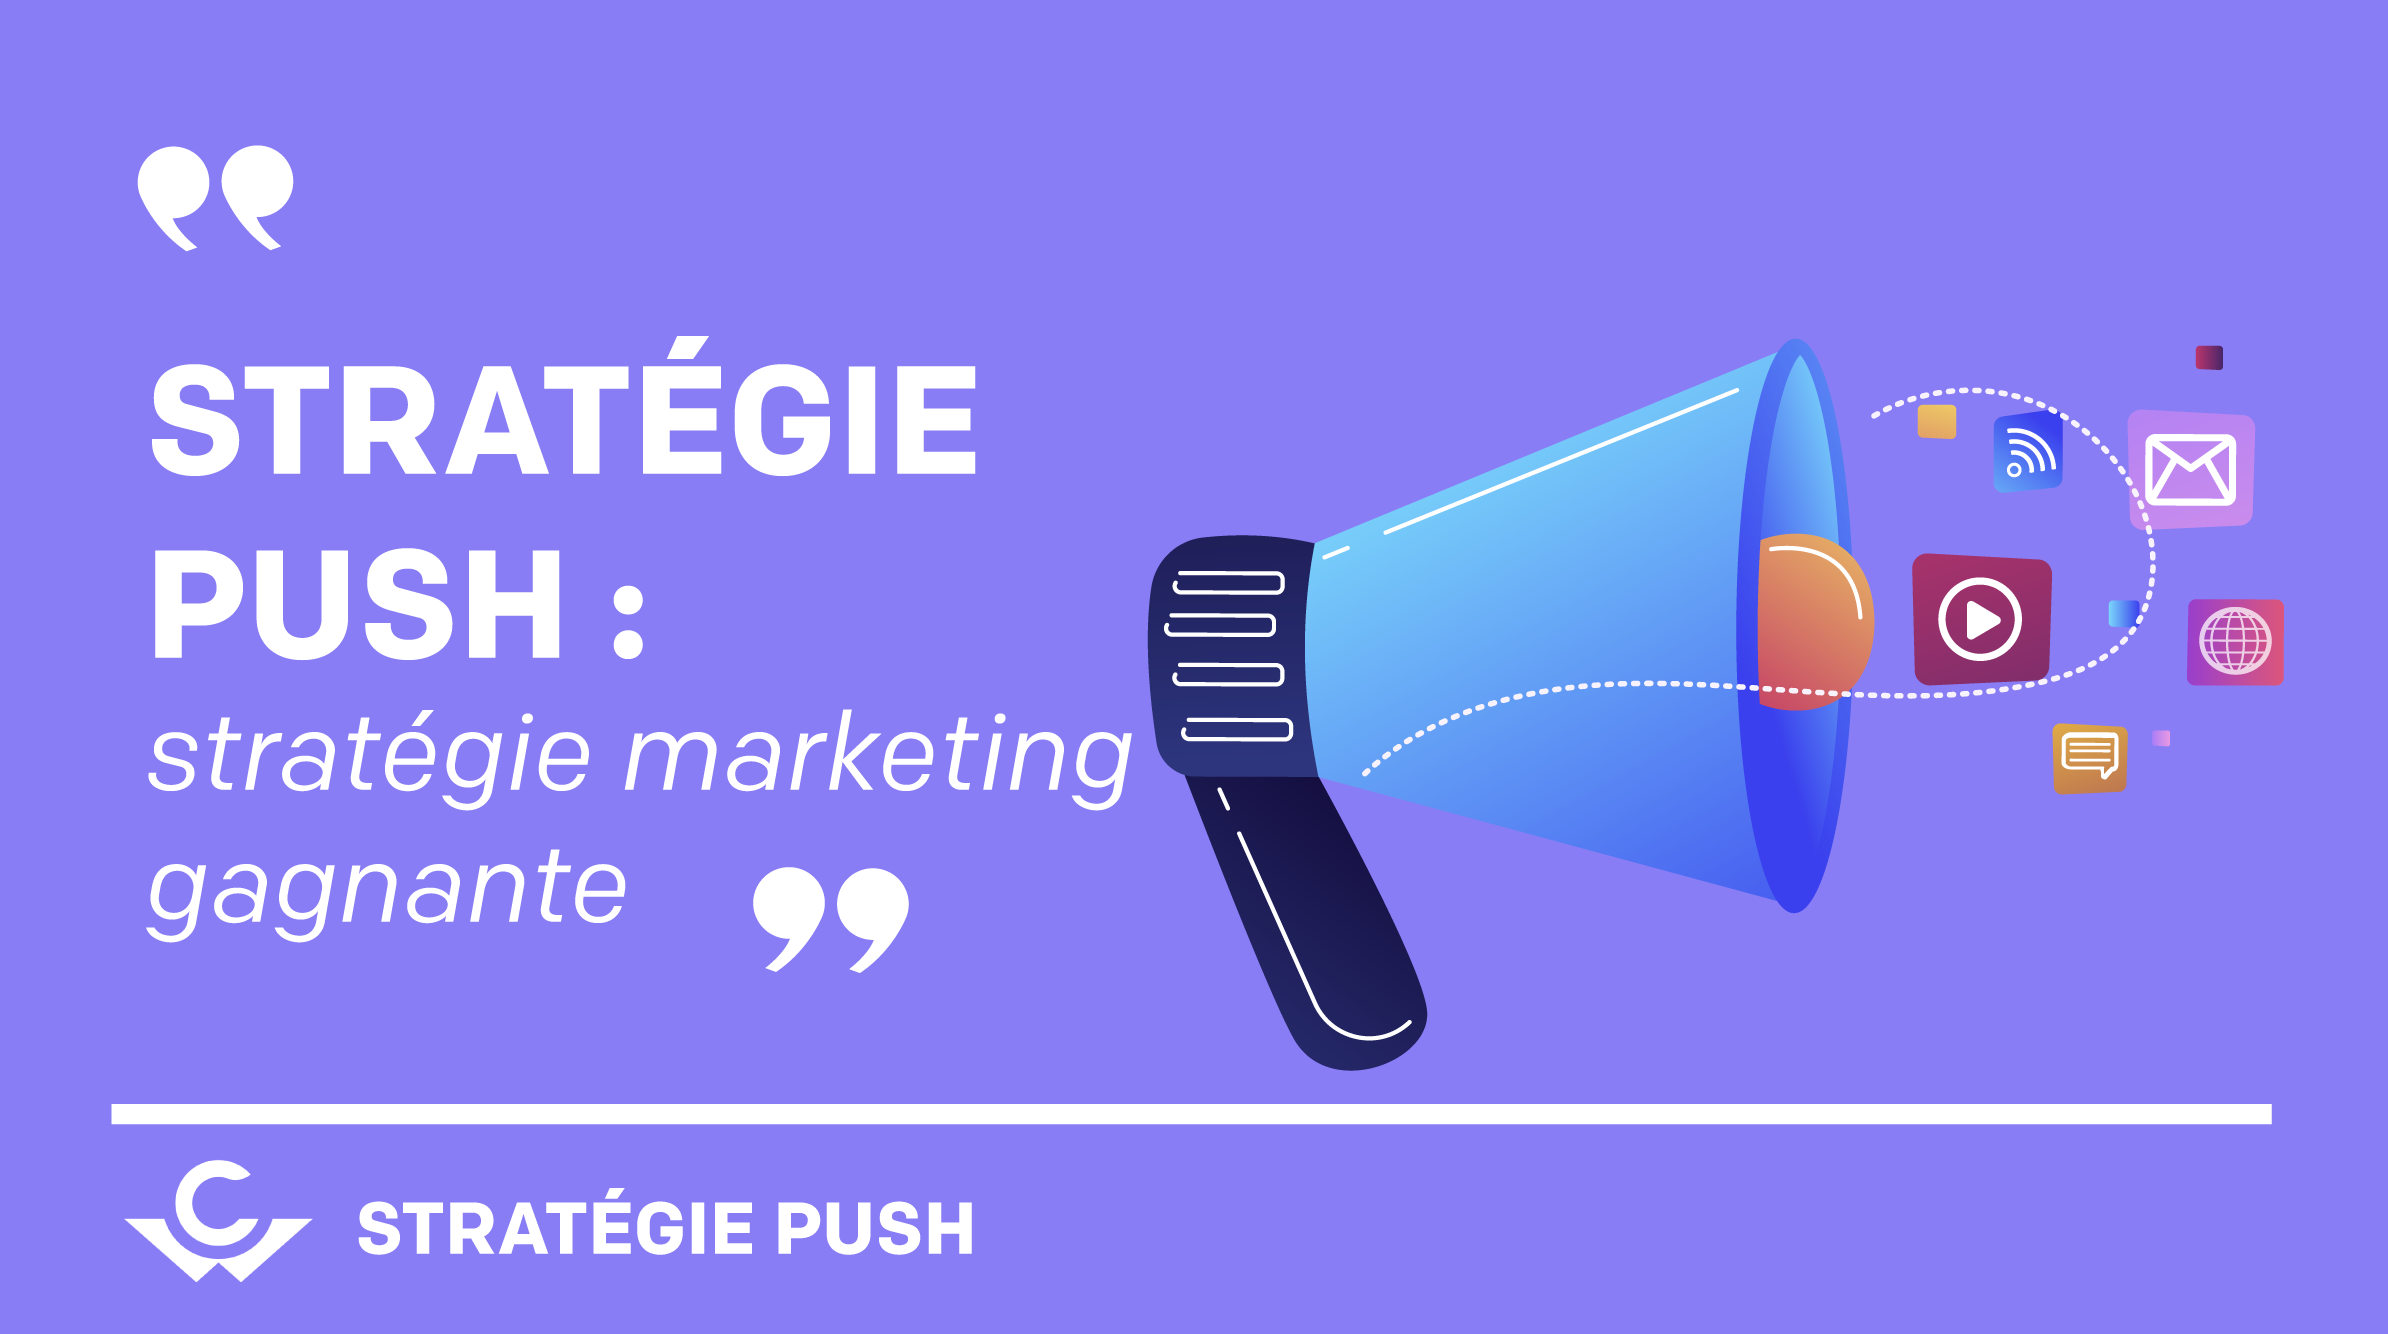 Strategie push : strategie marketing gagnante